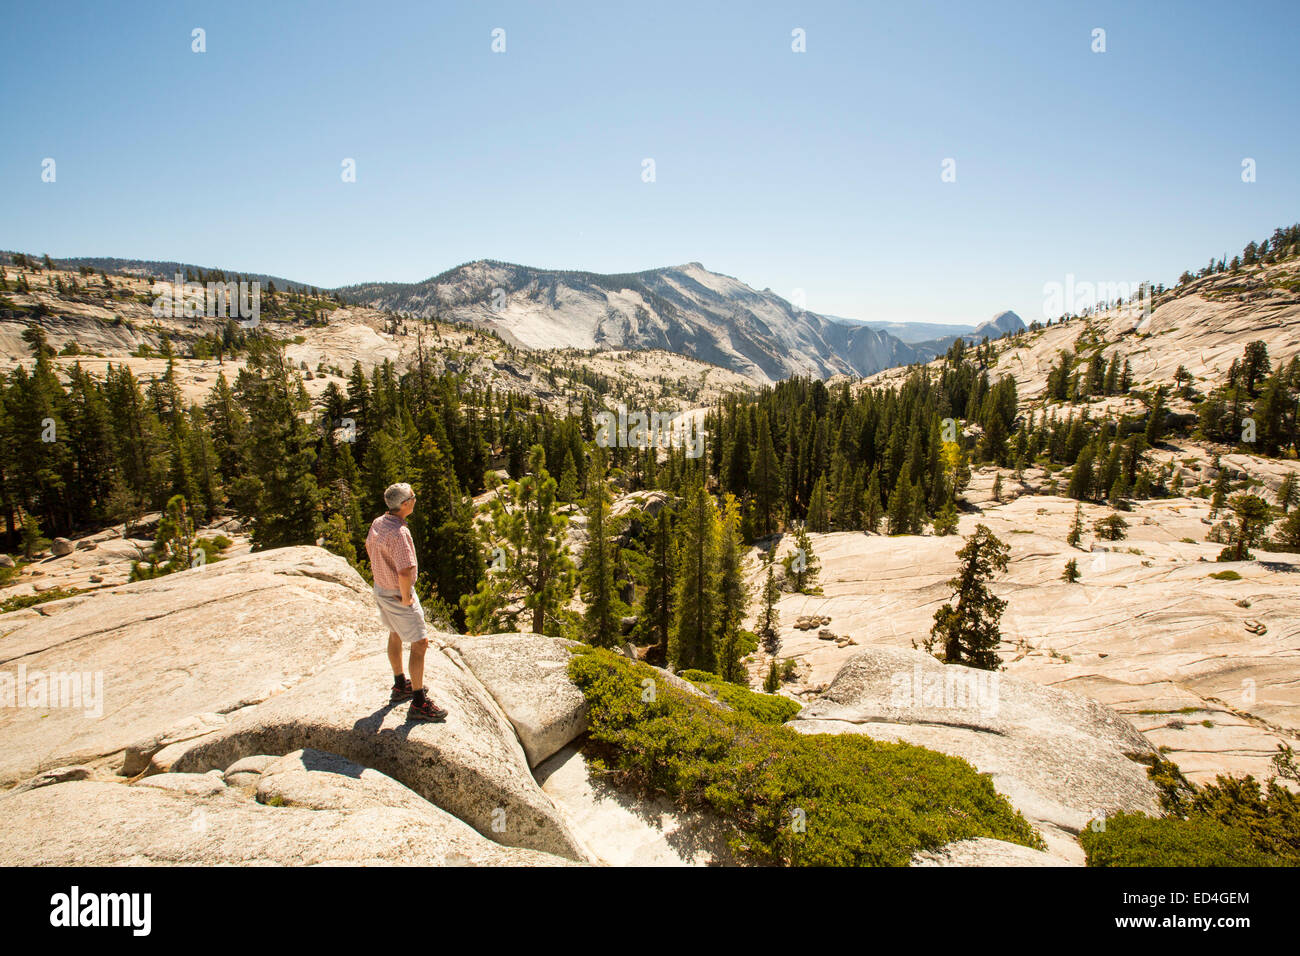 A Tourist in Yosemite National Park, California, USA. Stock Photo